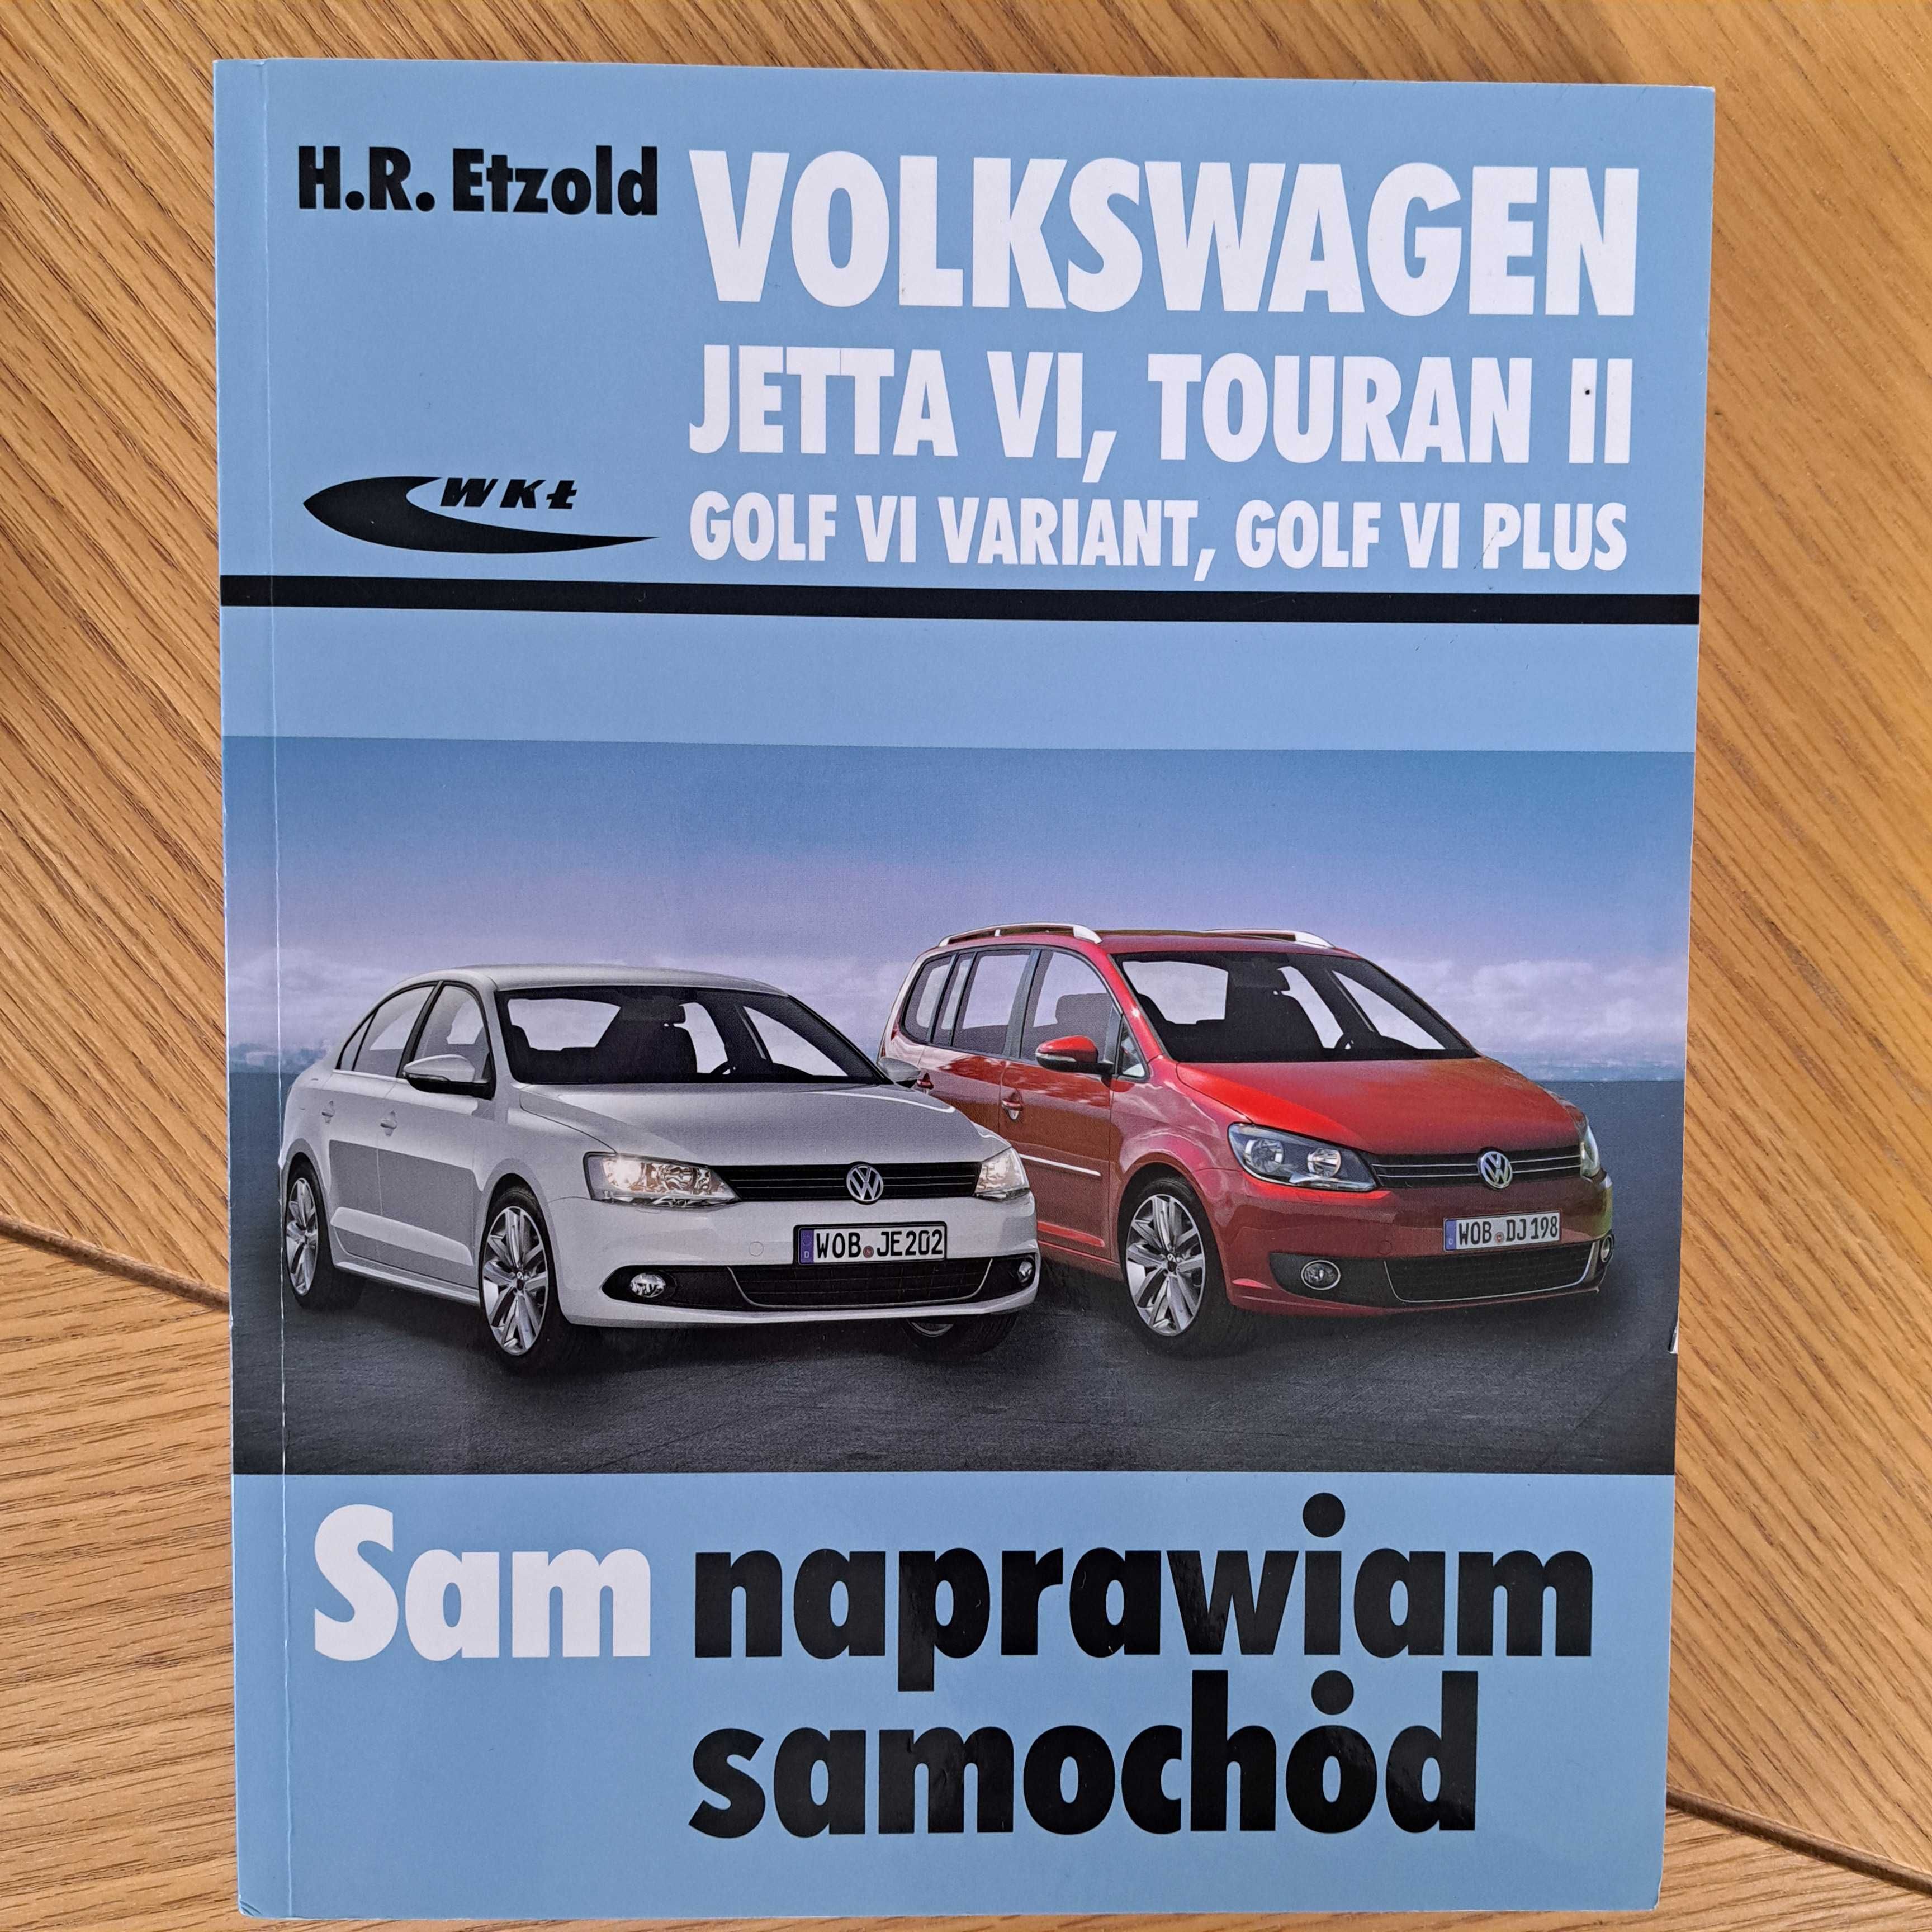 Sam naprawiam Volkswagen Jetta VI, Touran II, Golf VI Variant.